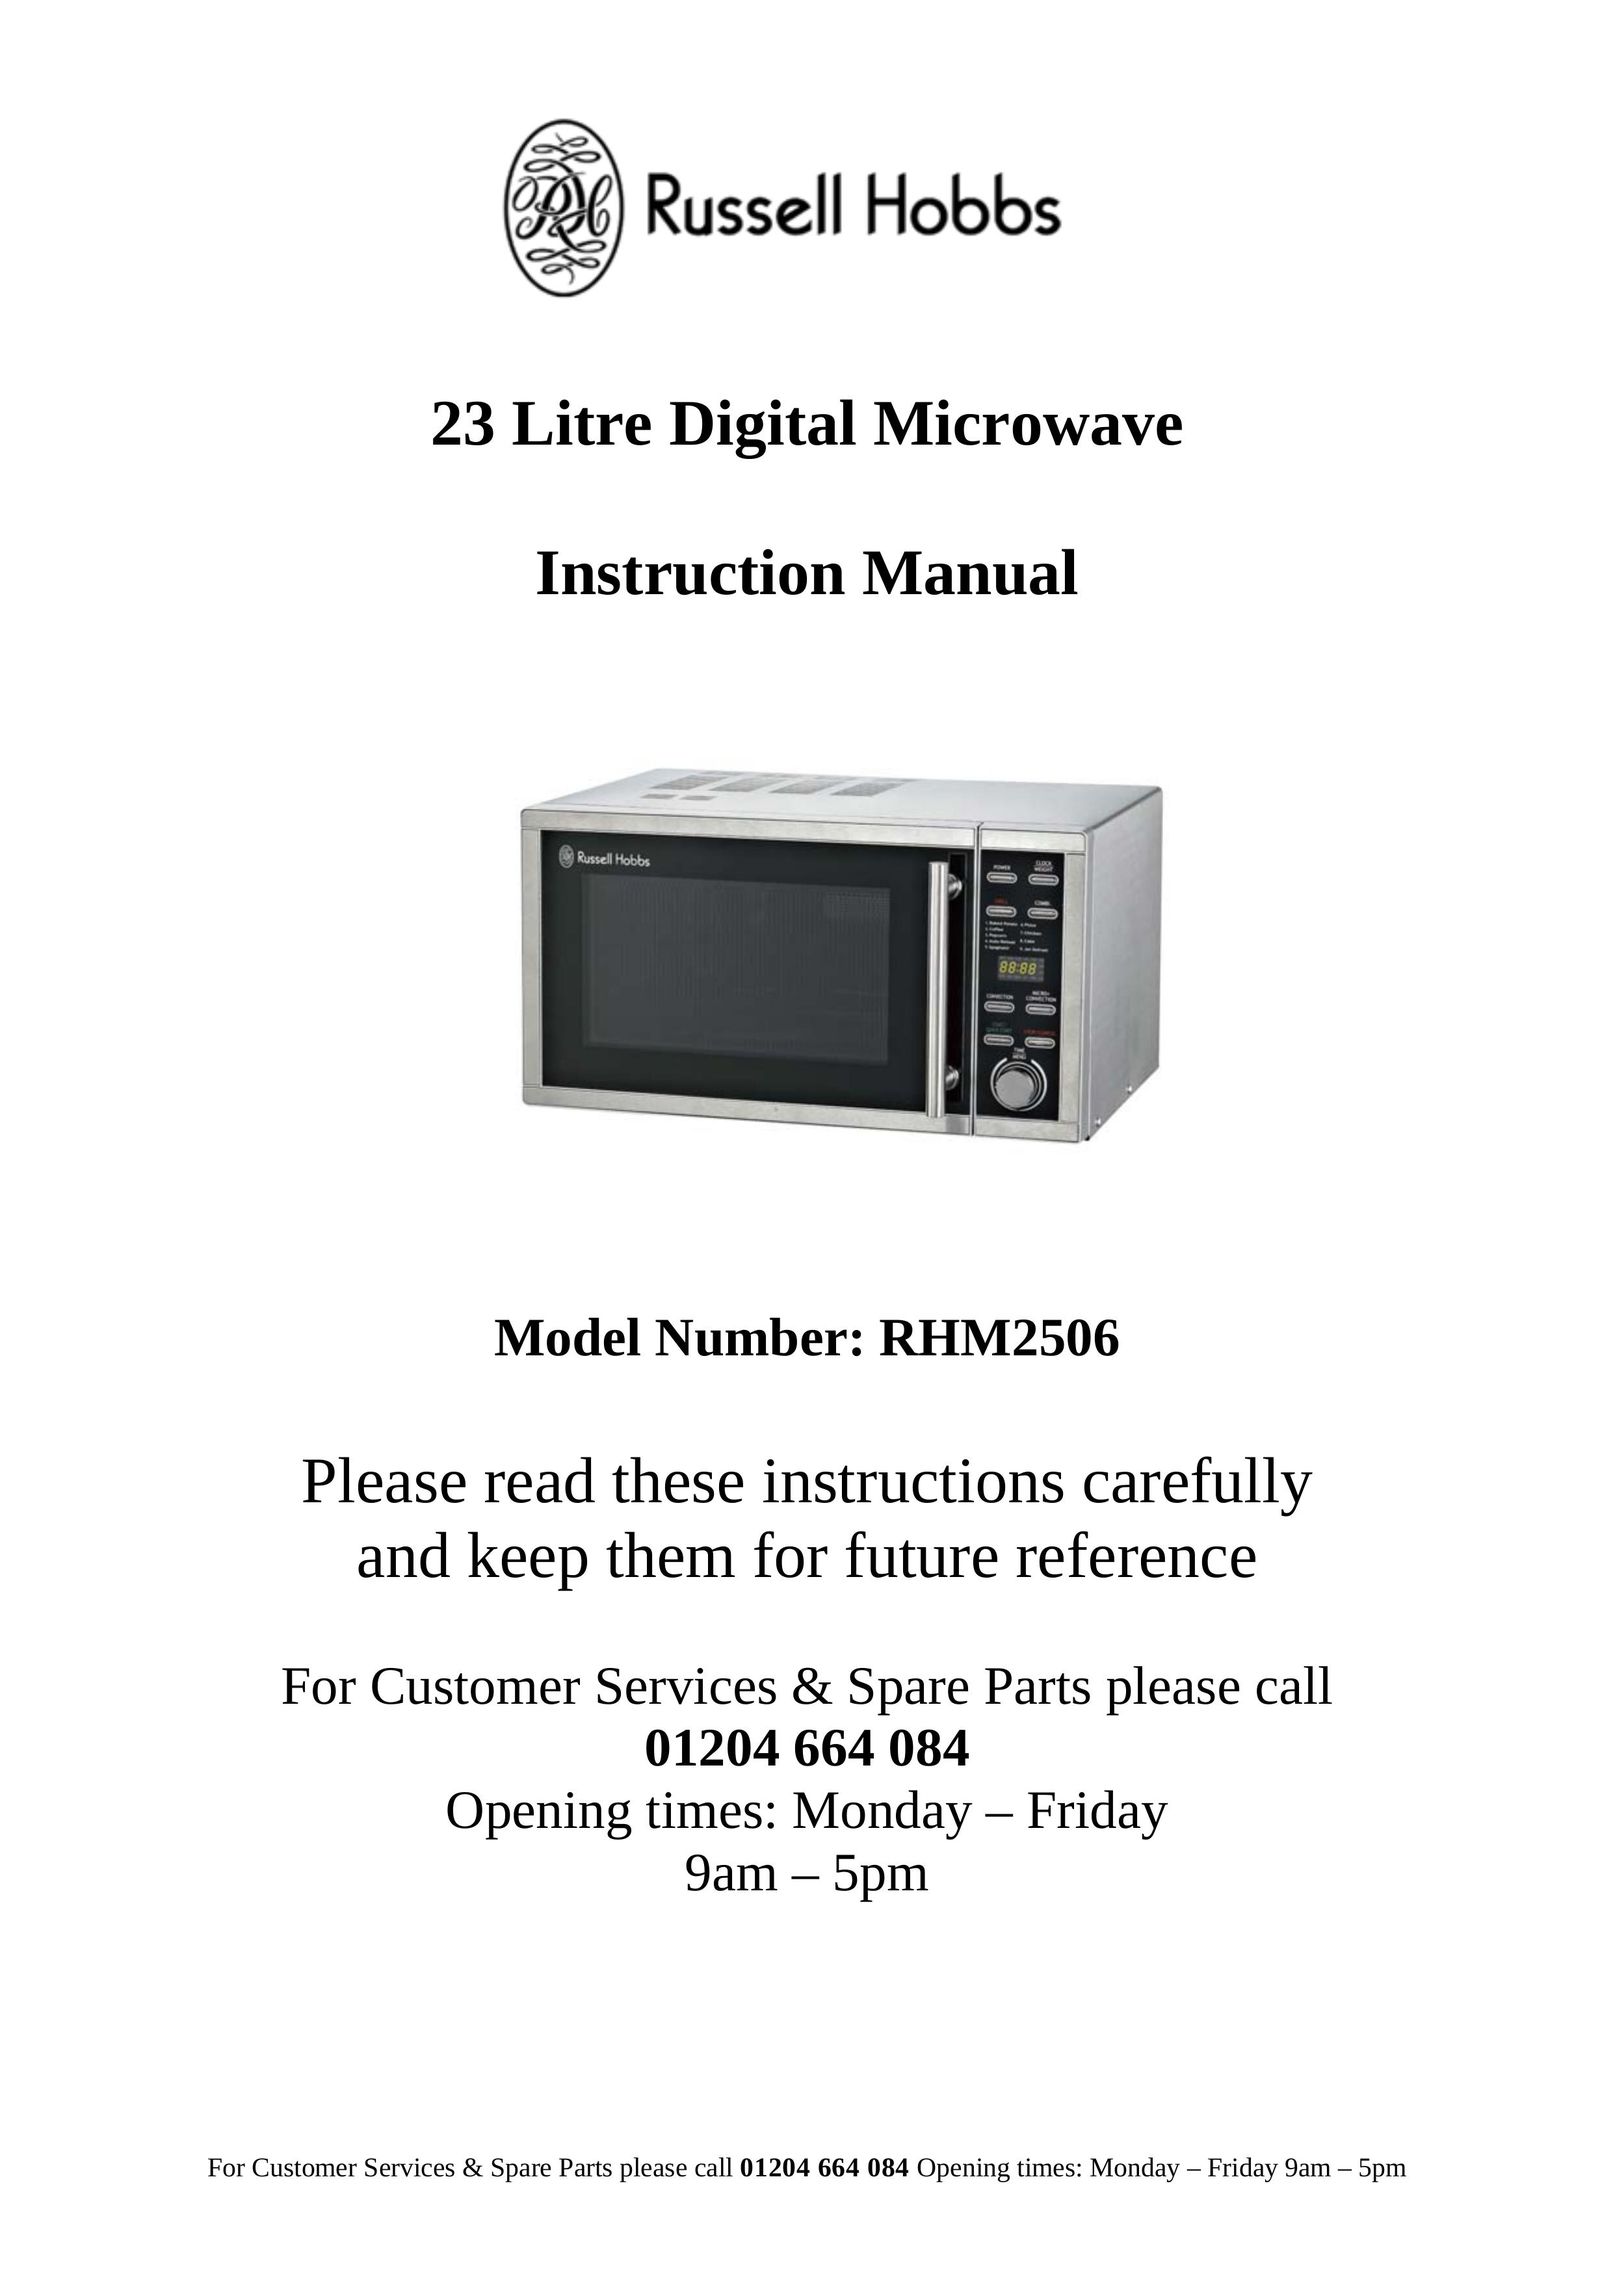 Russell Hobbs RHM2506 Microwave Oven User Manual